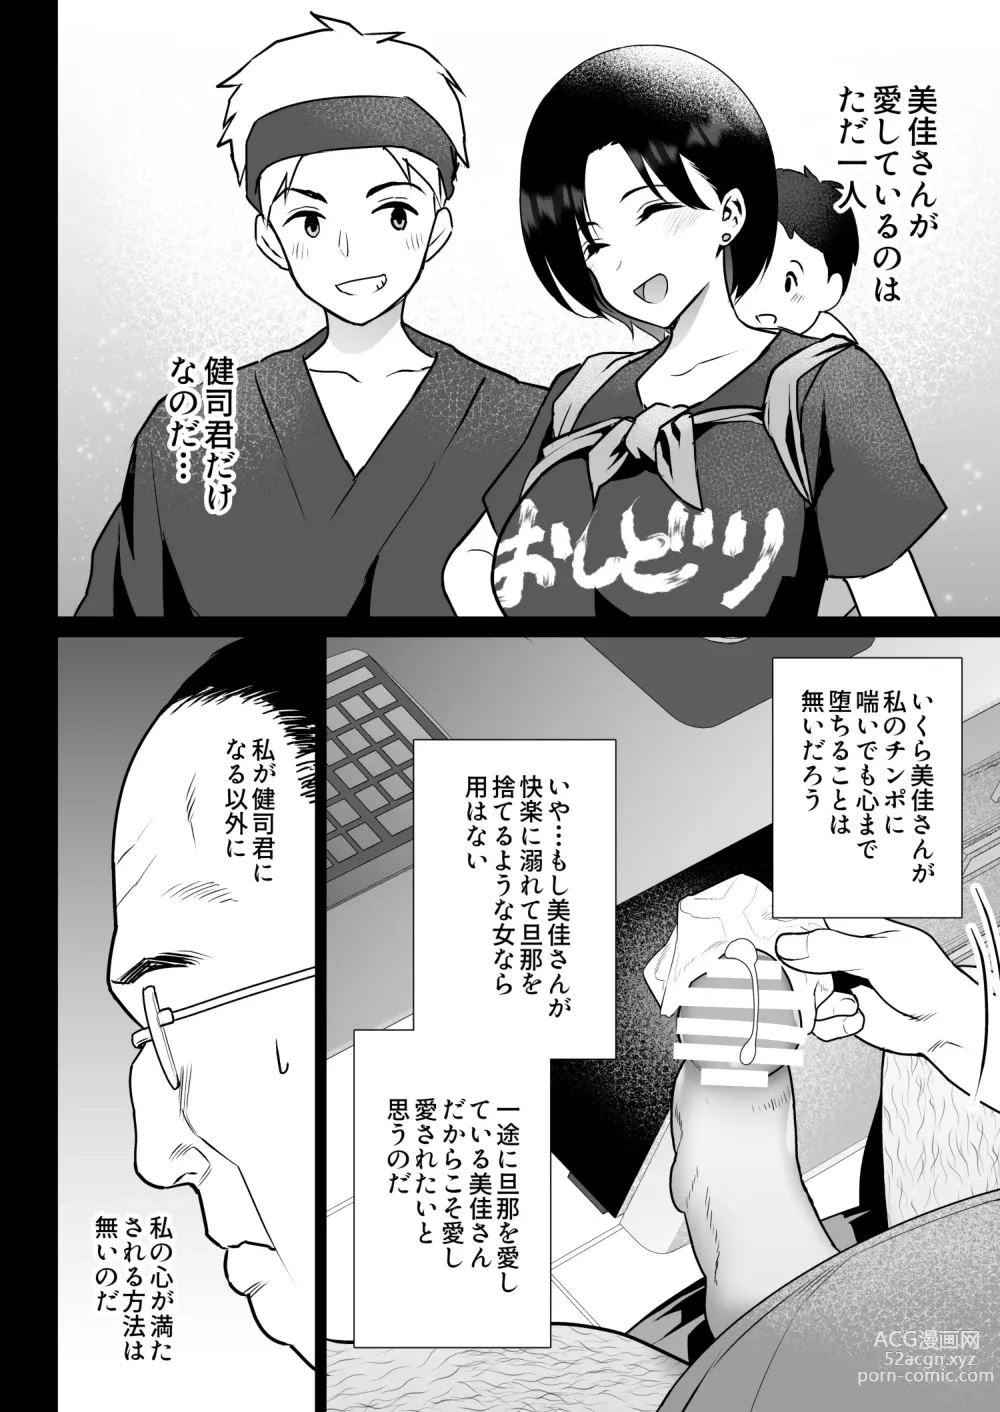 Page 63 of doujinshi Oshidori Fuufu Yakitorare